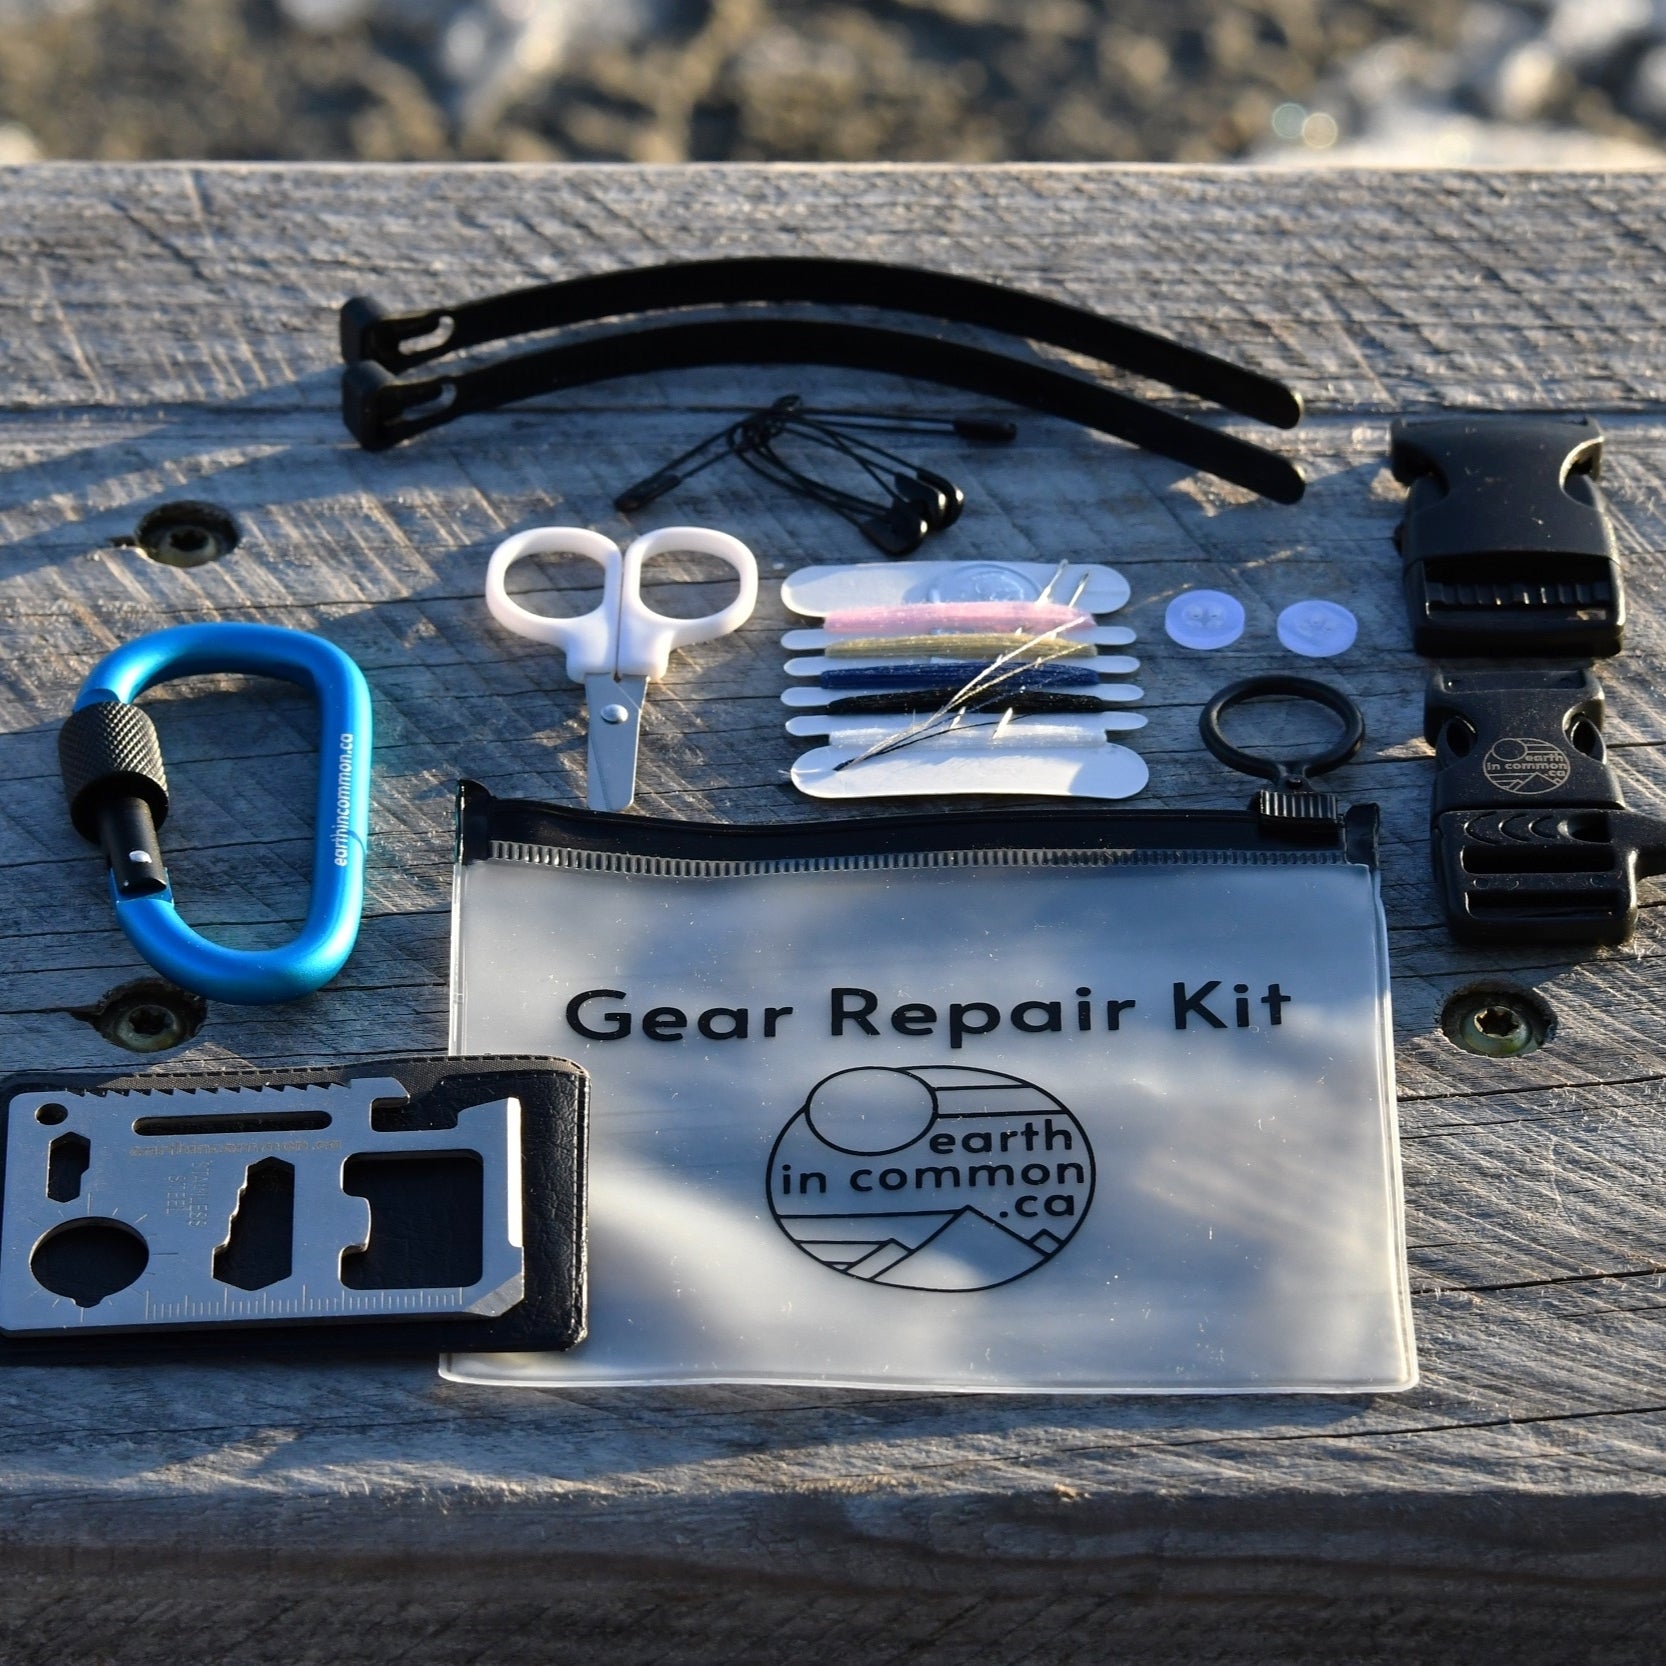 Zero Waste Gear Repair Kit